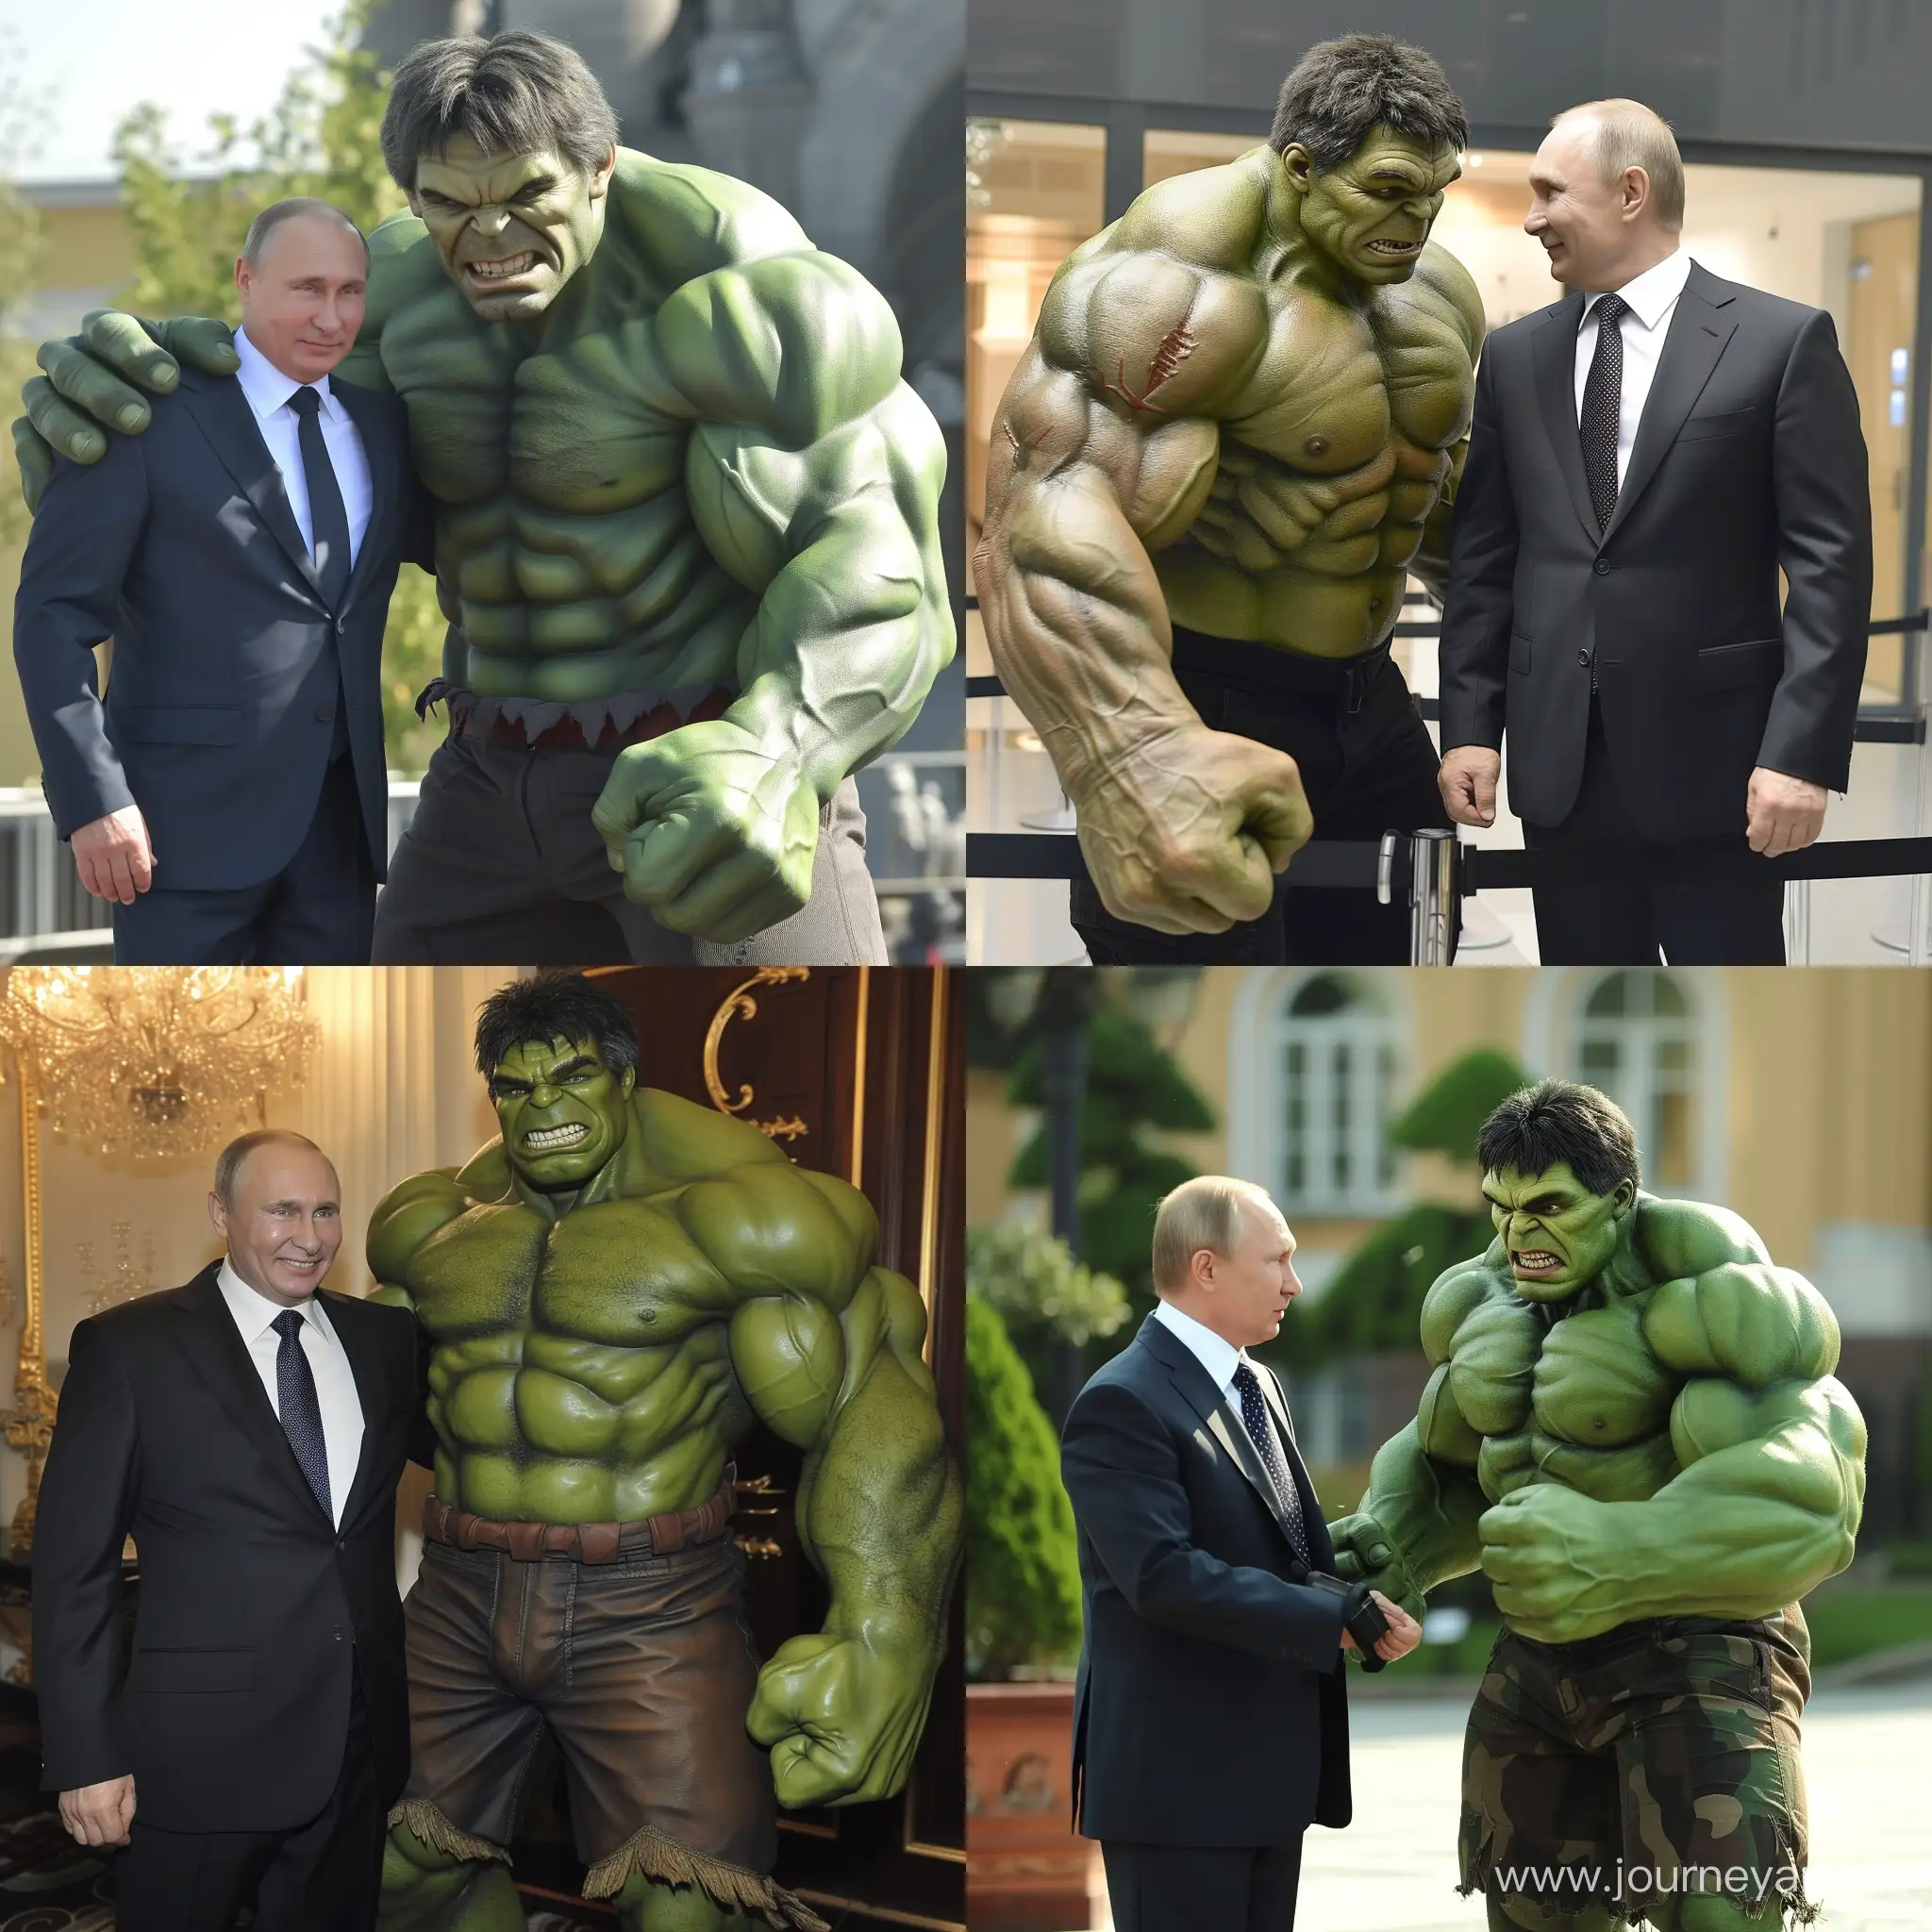 Putin-Encounter-with-Hulk-in-the-Kremlin